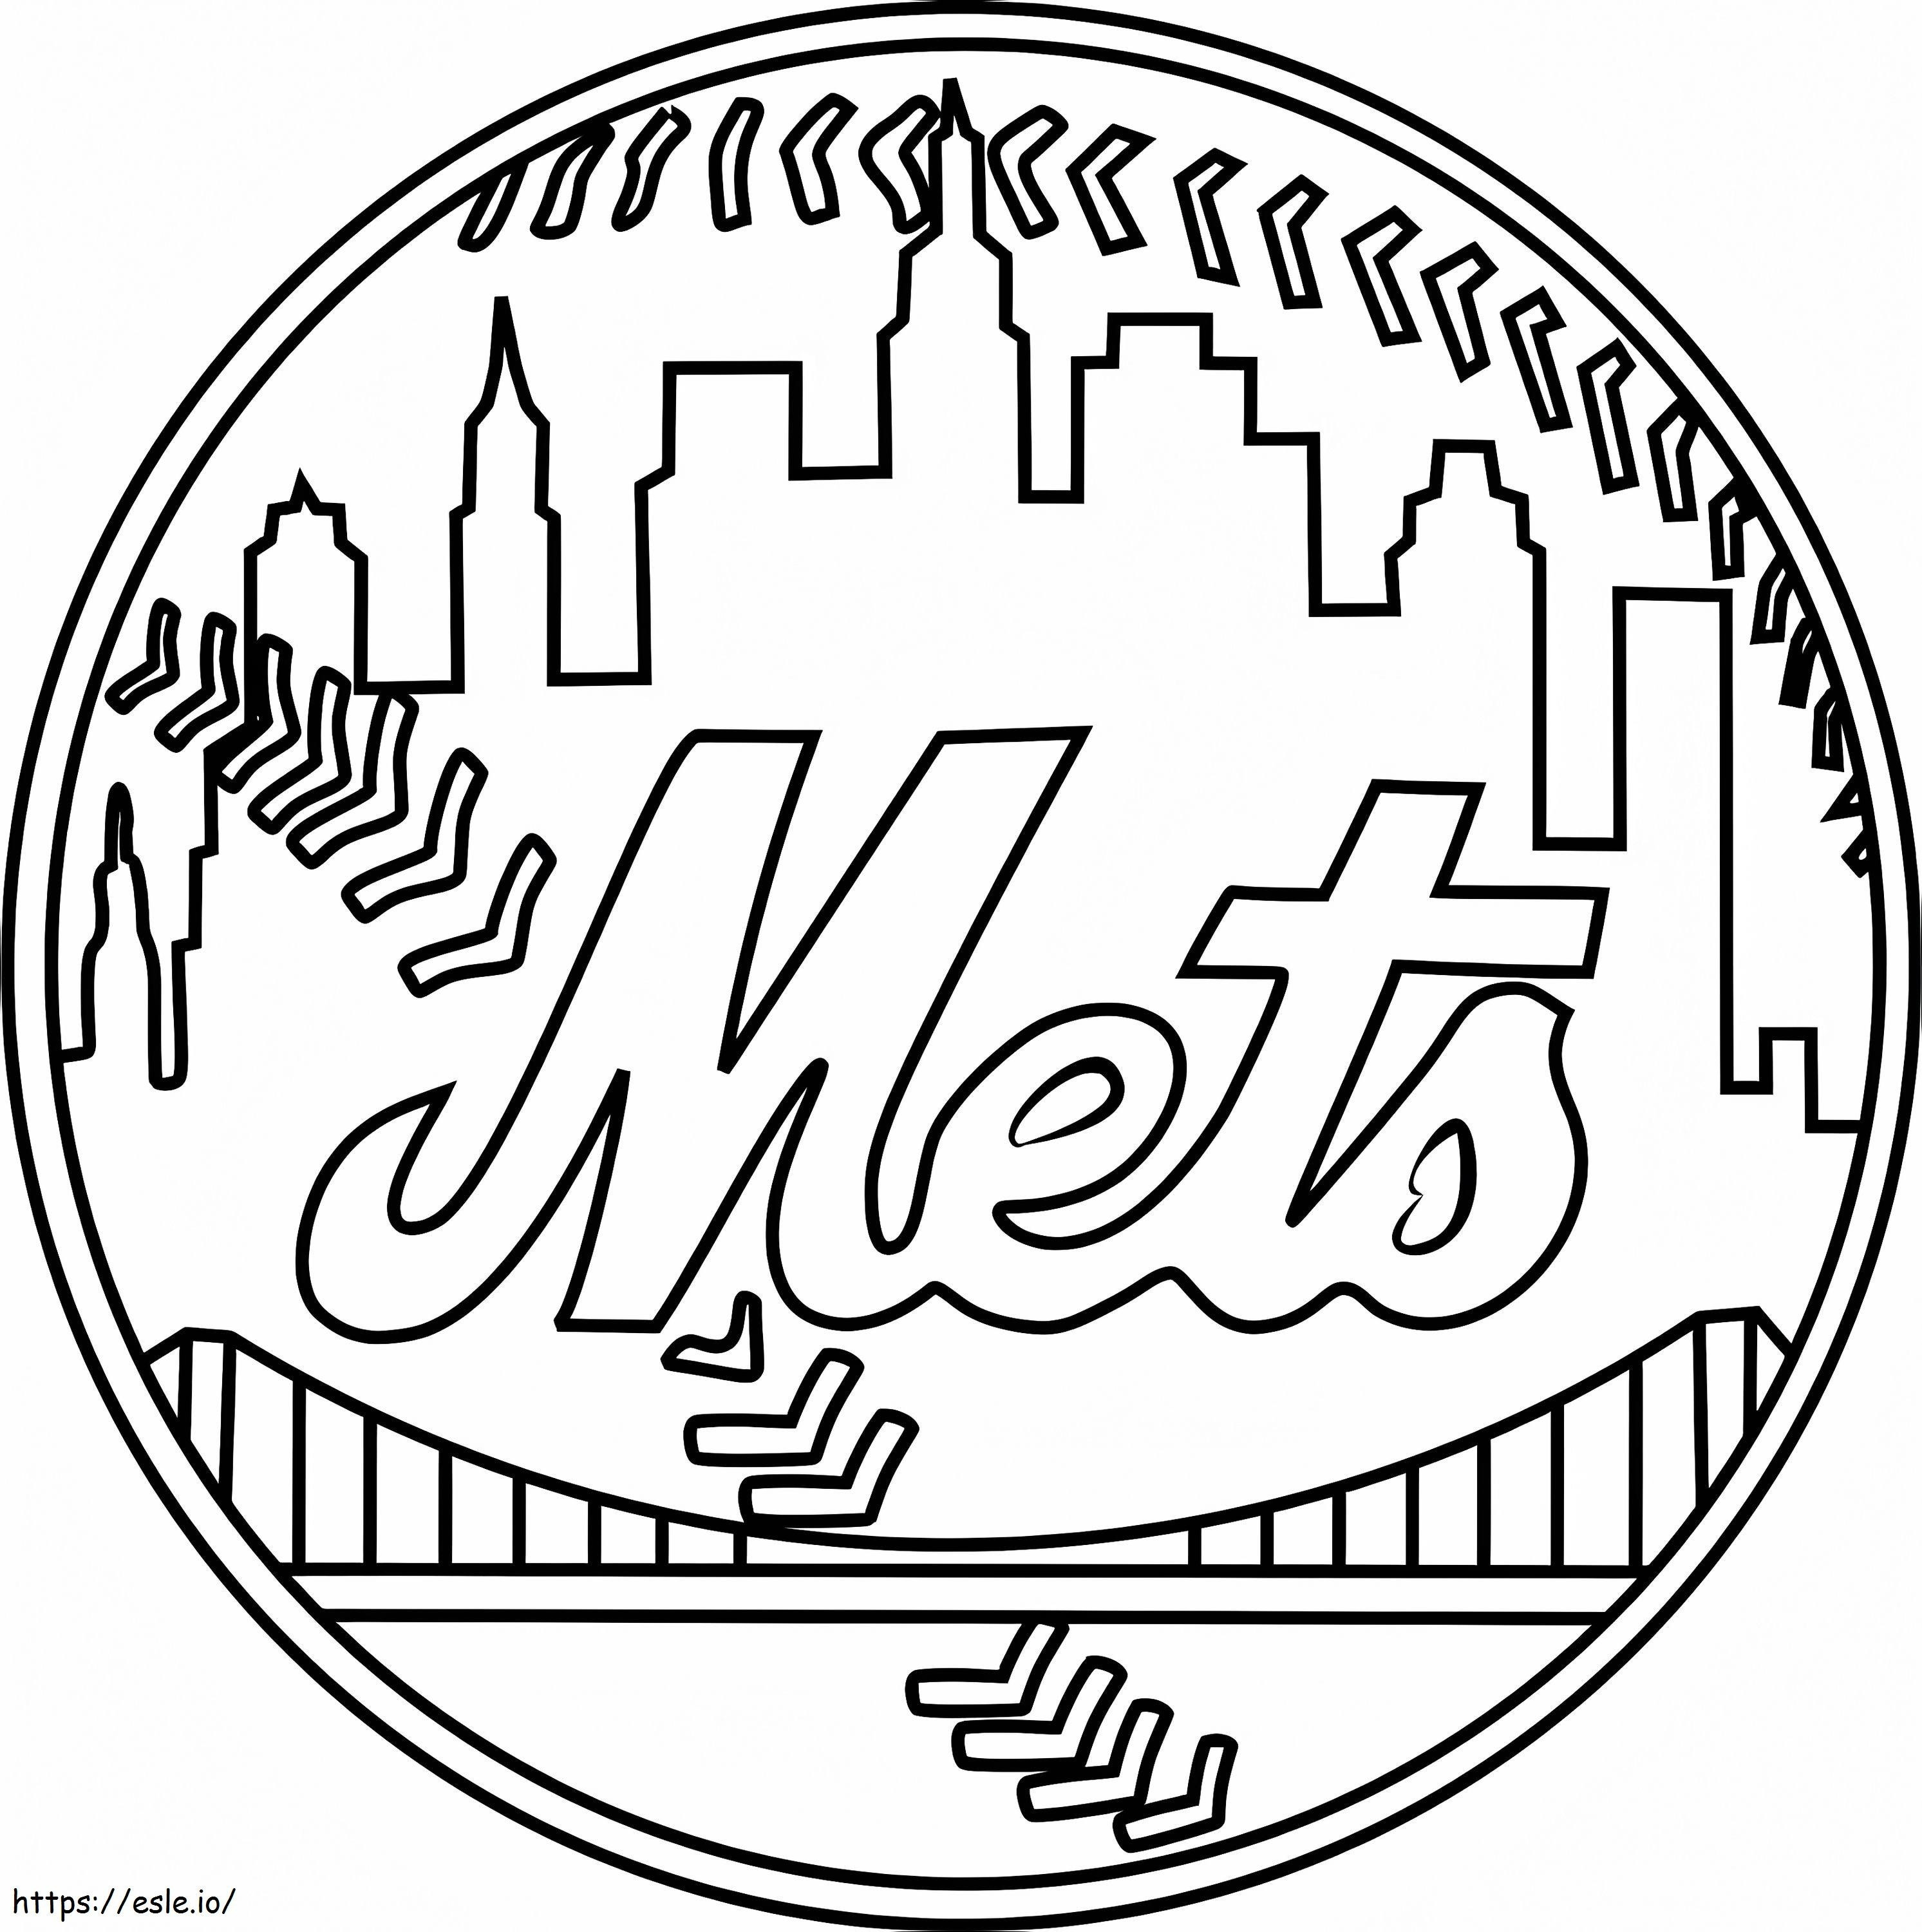 Logo New York Mets kolorowanka